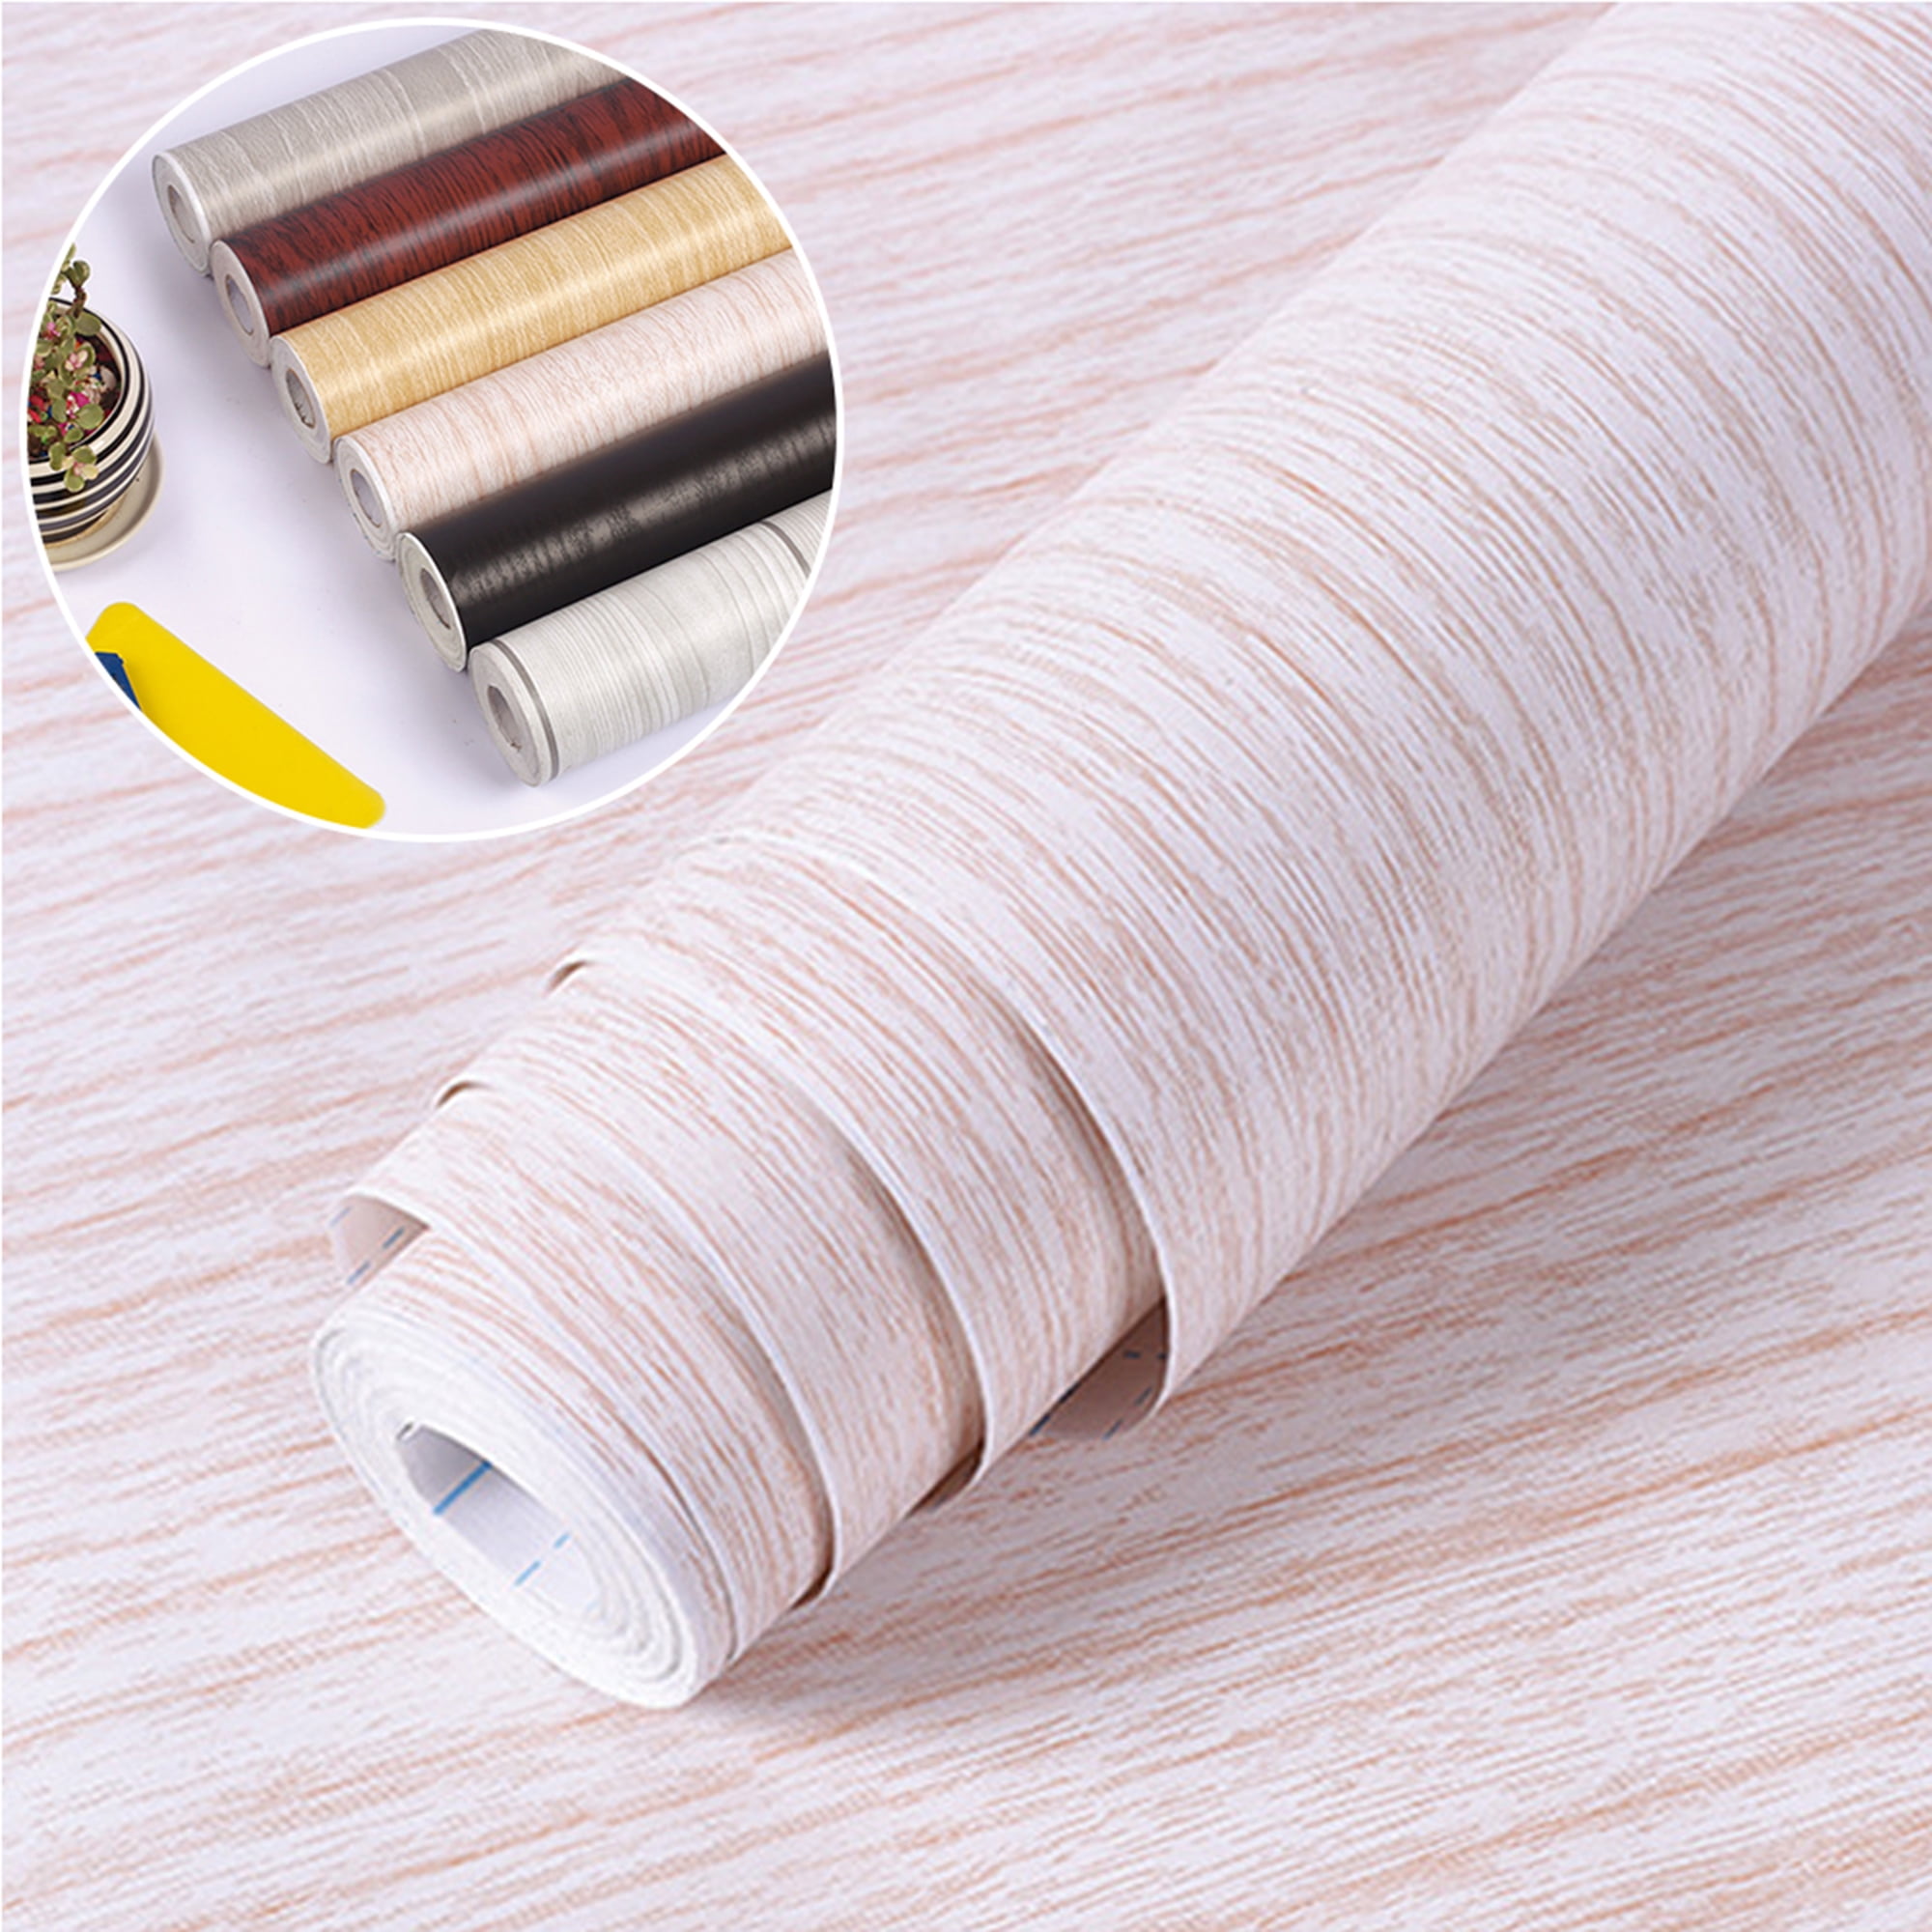 Self Adhesive Wood Wallpaper Waterproof Contact Paper Stick and Peel Vinyl Decor 